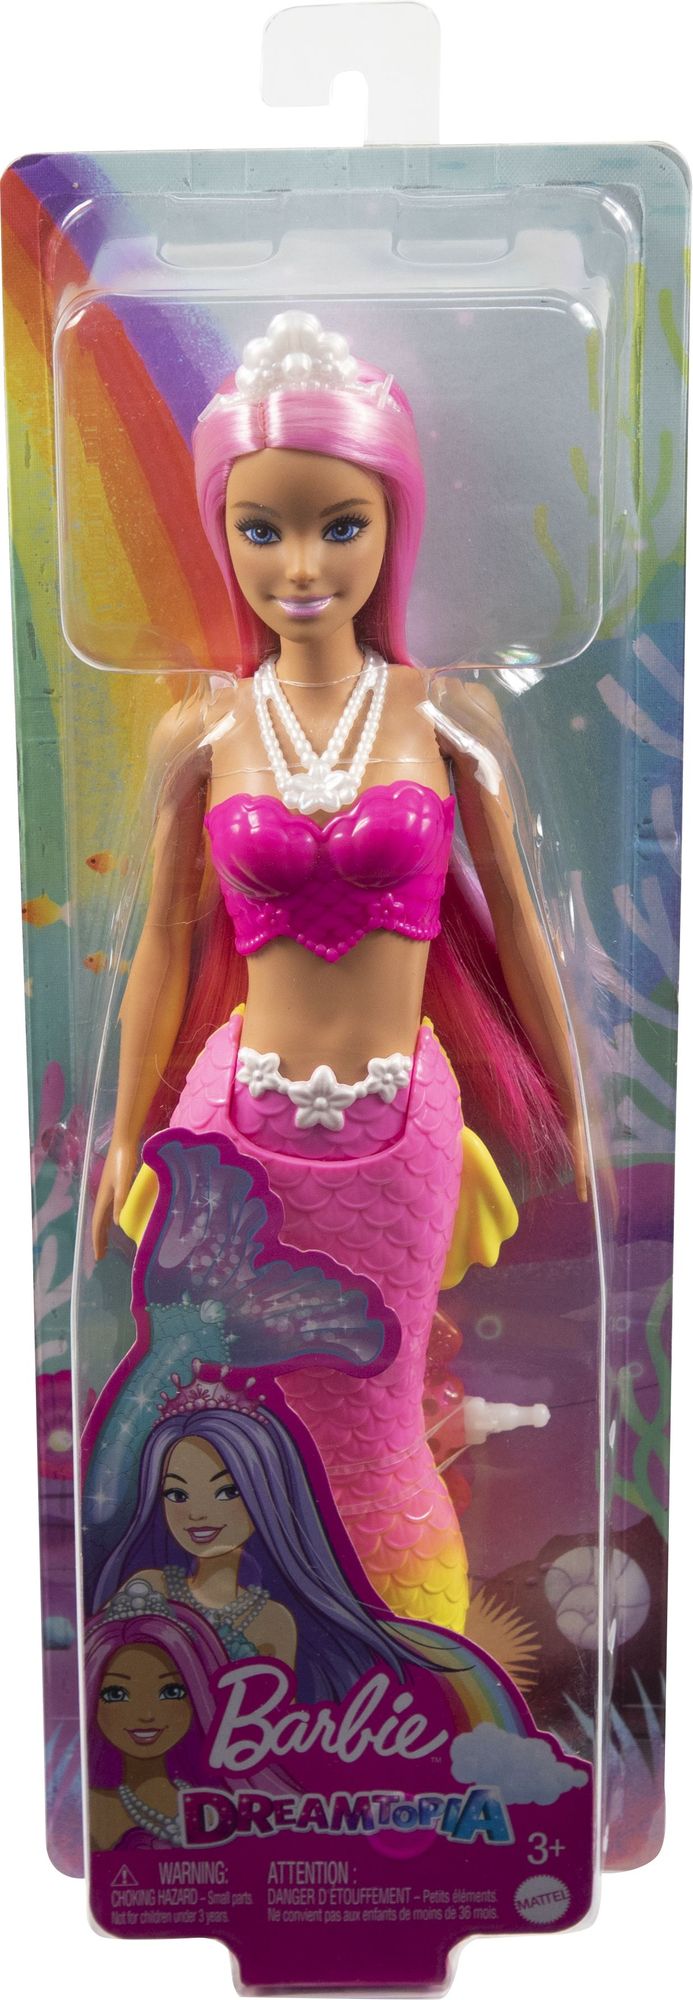 Barbie - Barbie Dreamtopia Meerjungfrau-Puppe' kaufen - Spielwaren